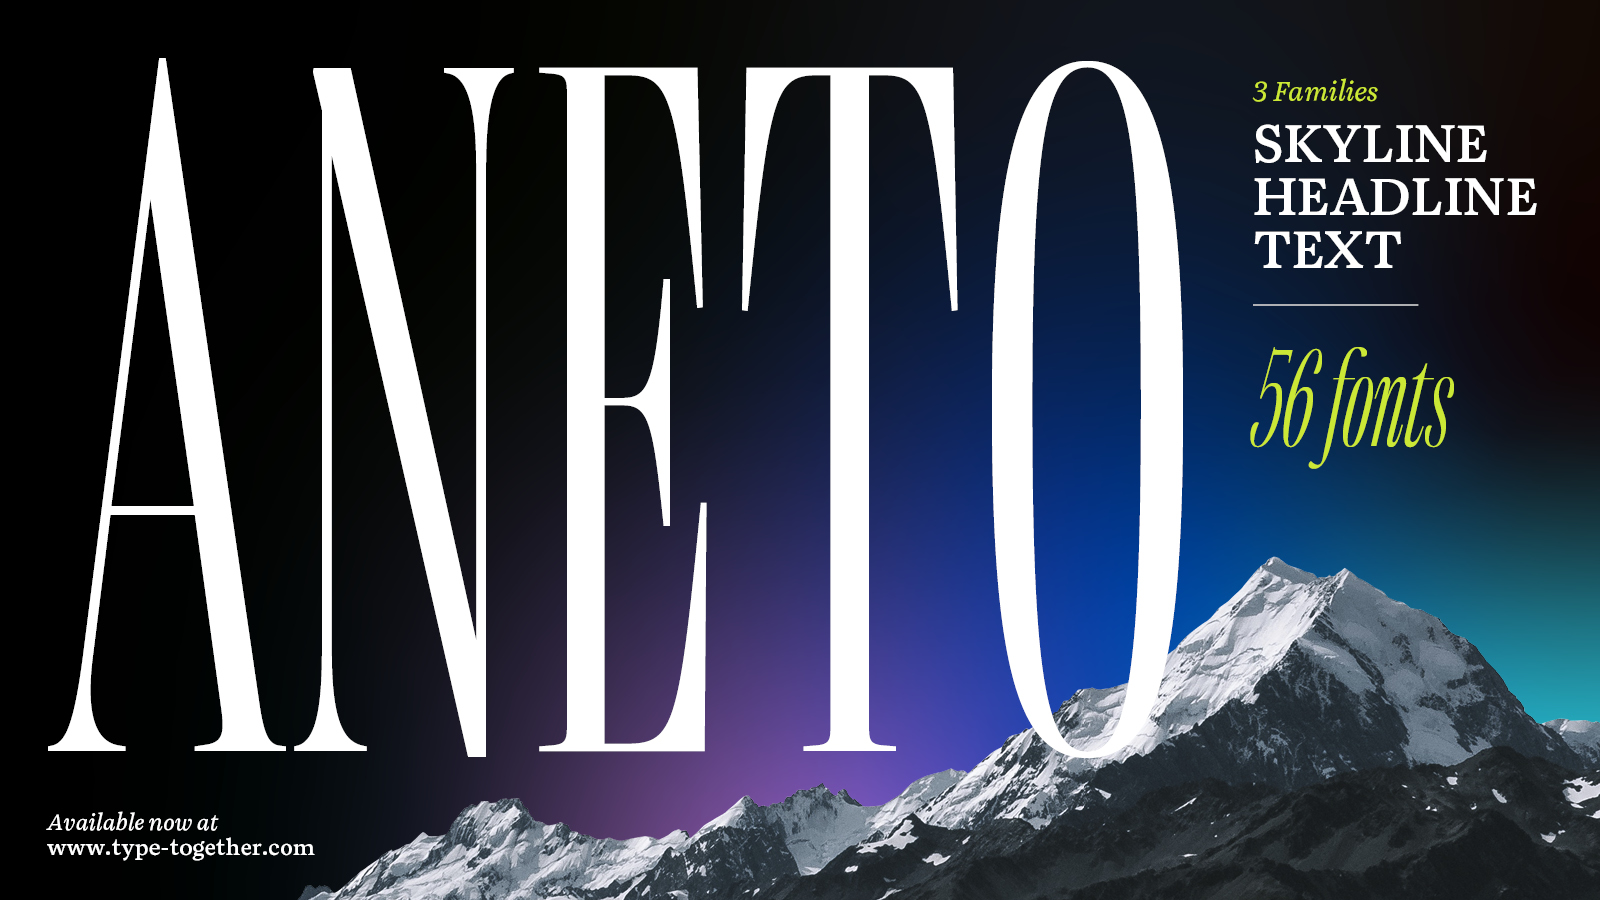 Aneto new release